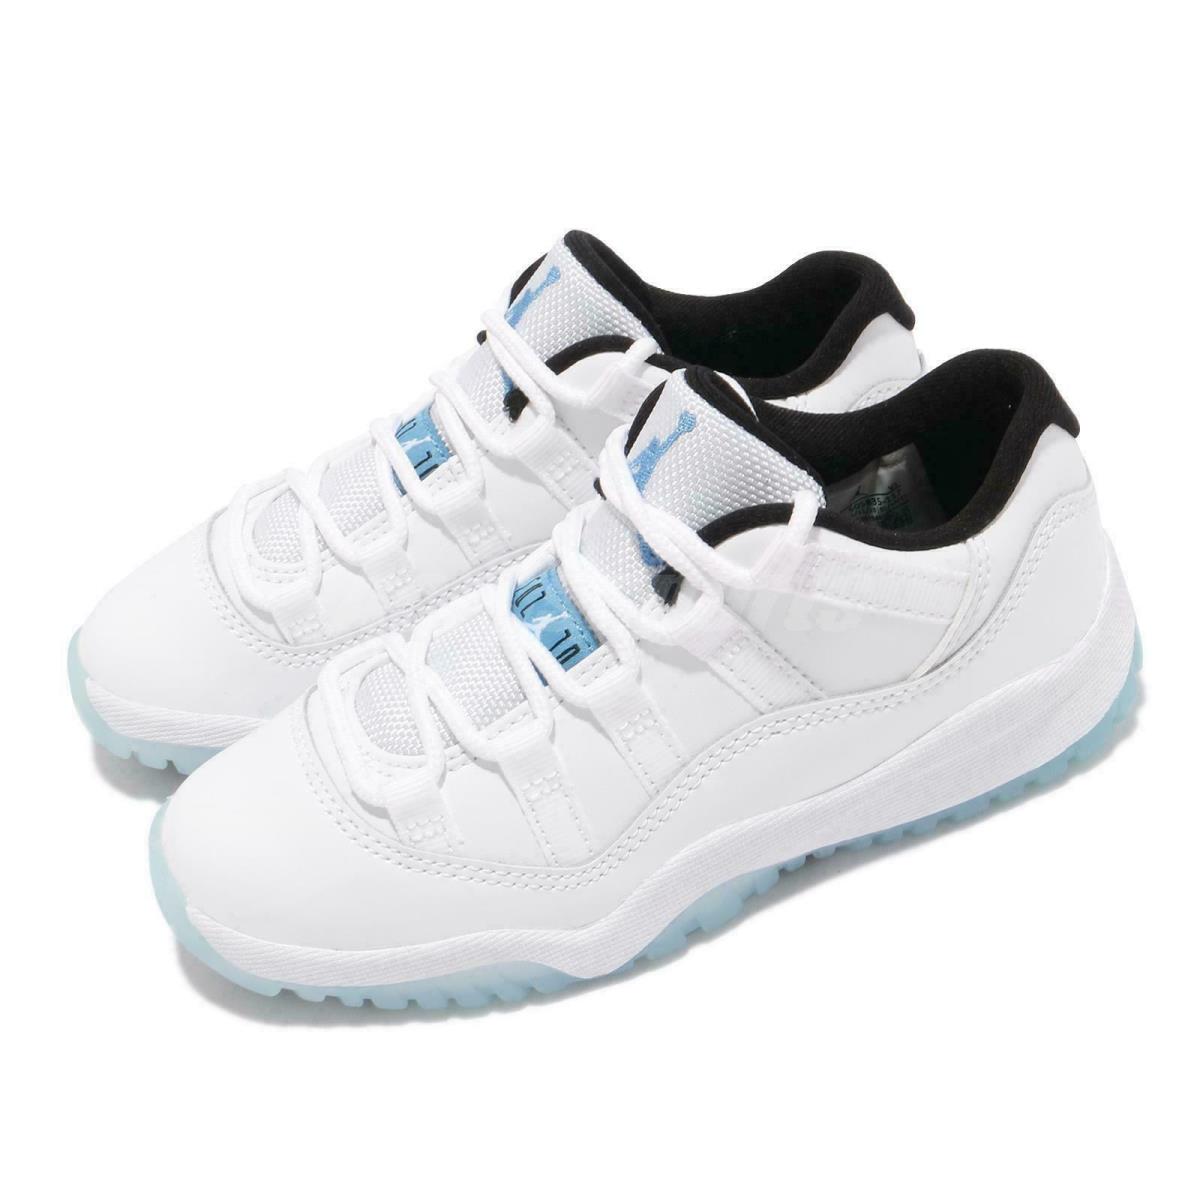 Nike Jordan11 Retro Low PS White Legend Blue Kids Casual Shoe 505835117 - White